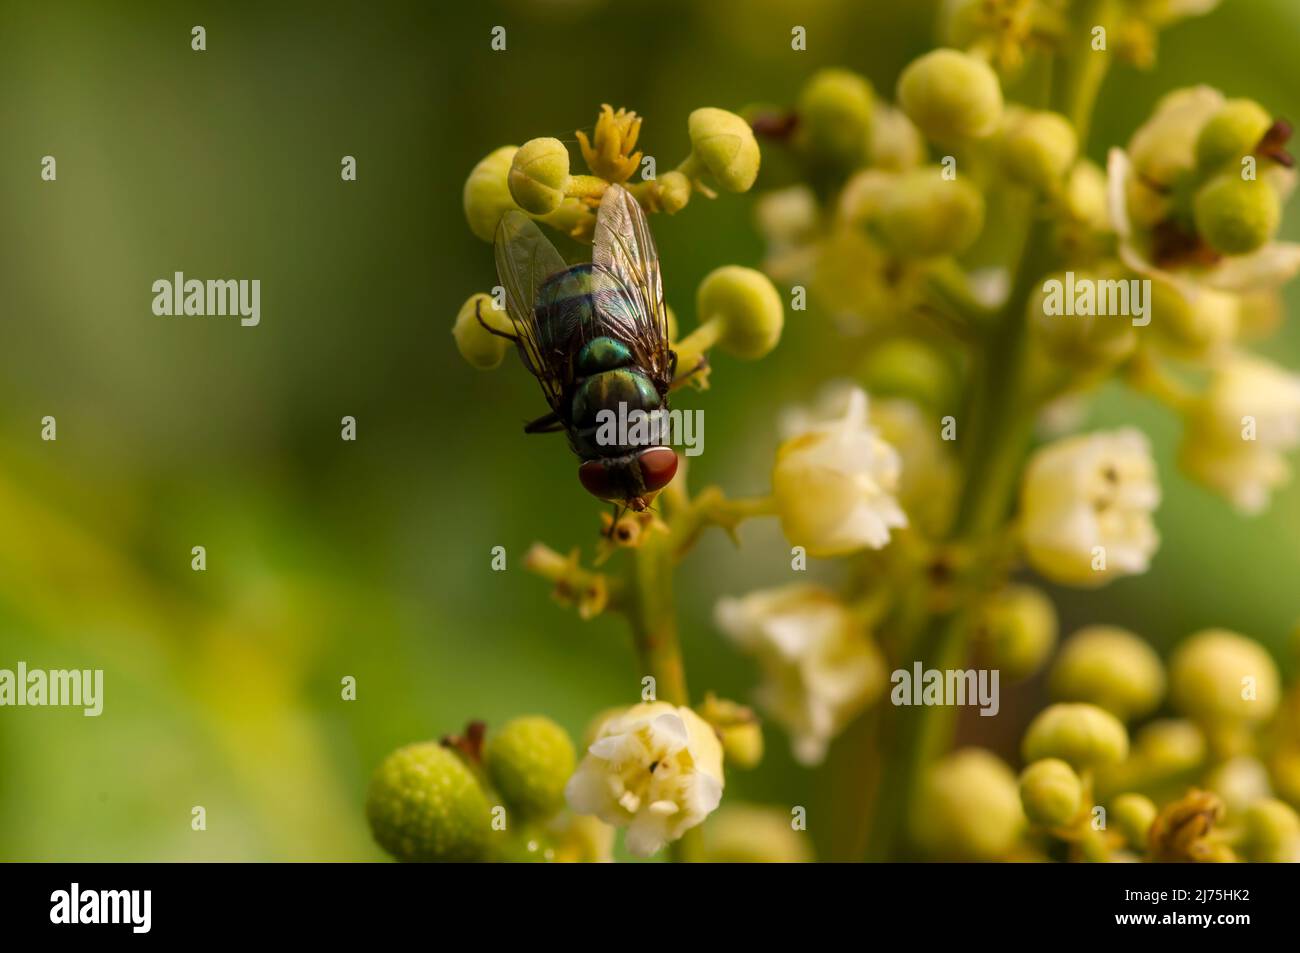 A fly on Dimocarpus longan flower, selected focus Stock Photo